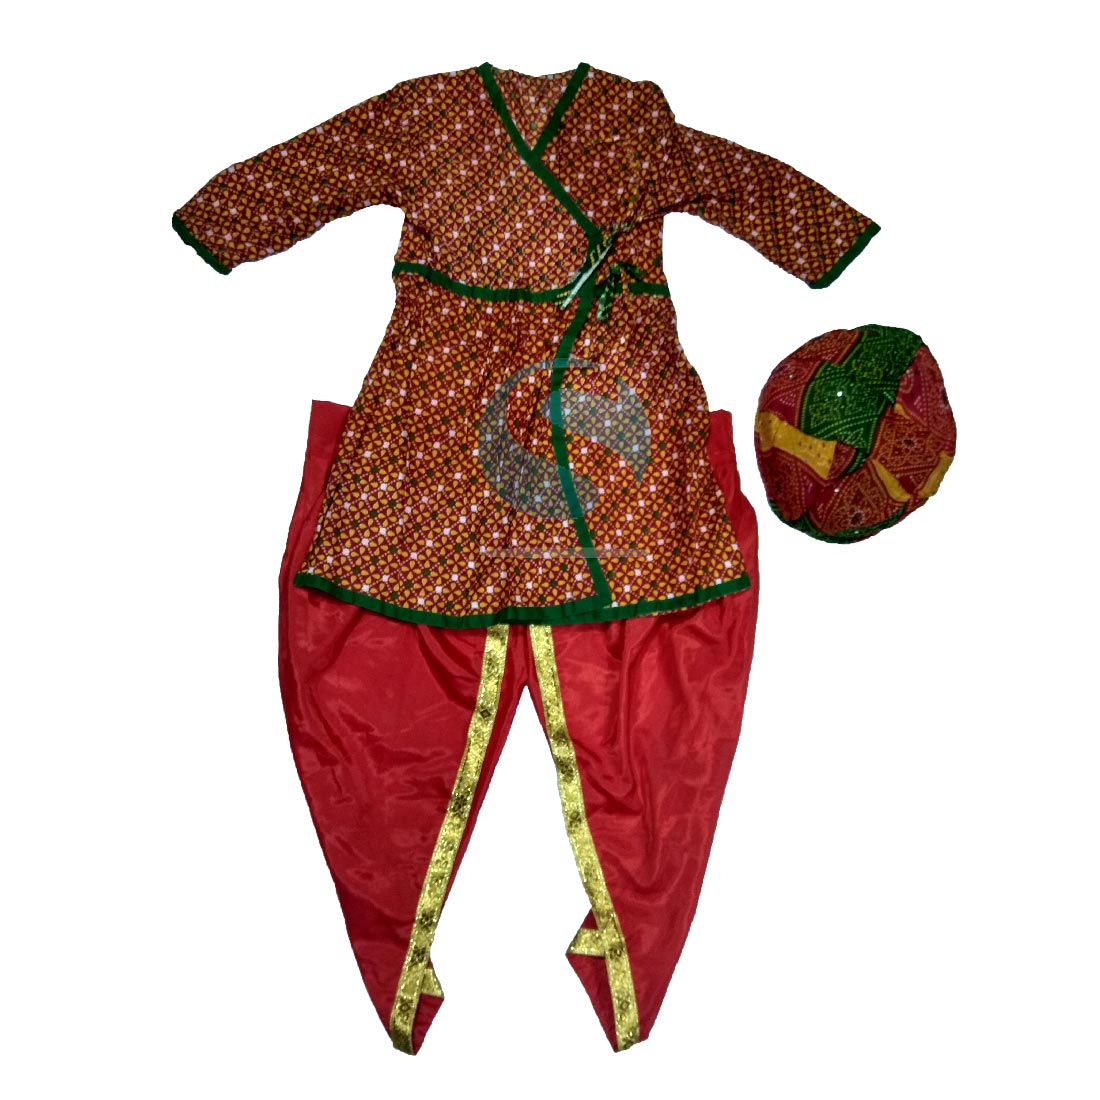 inhzoy Arabian Prince Costume Kids Boys Suits Halloween Cosplay Fancy Dress  up Outfit - Walmart.com